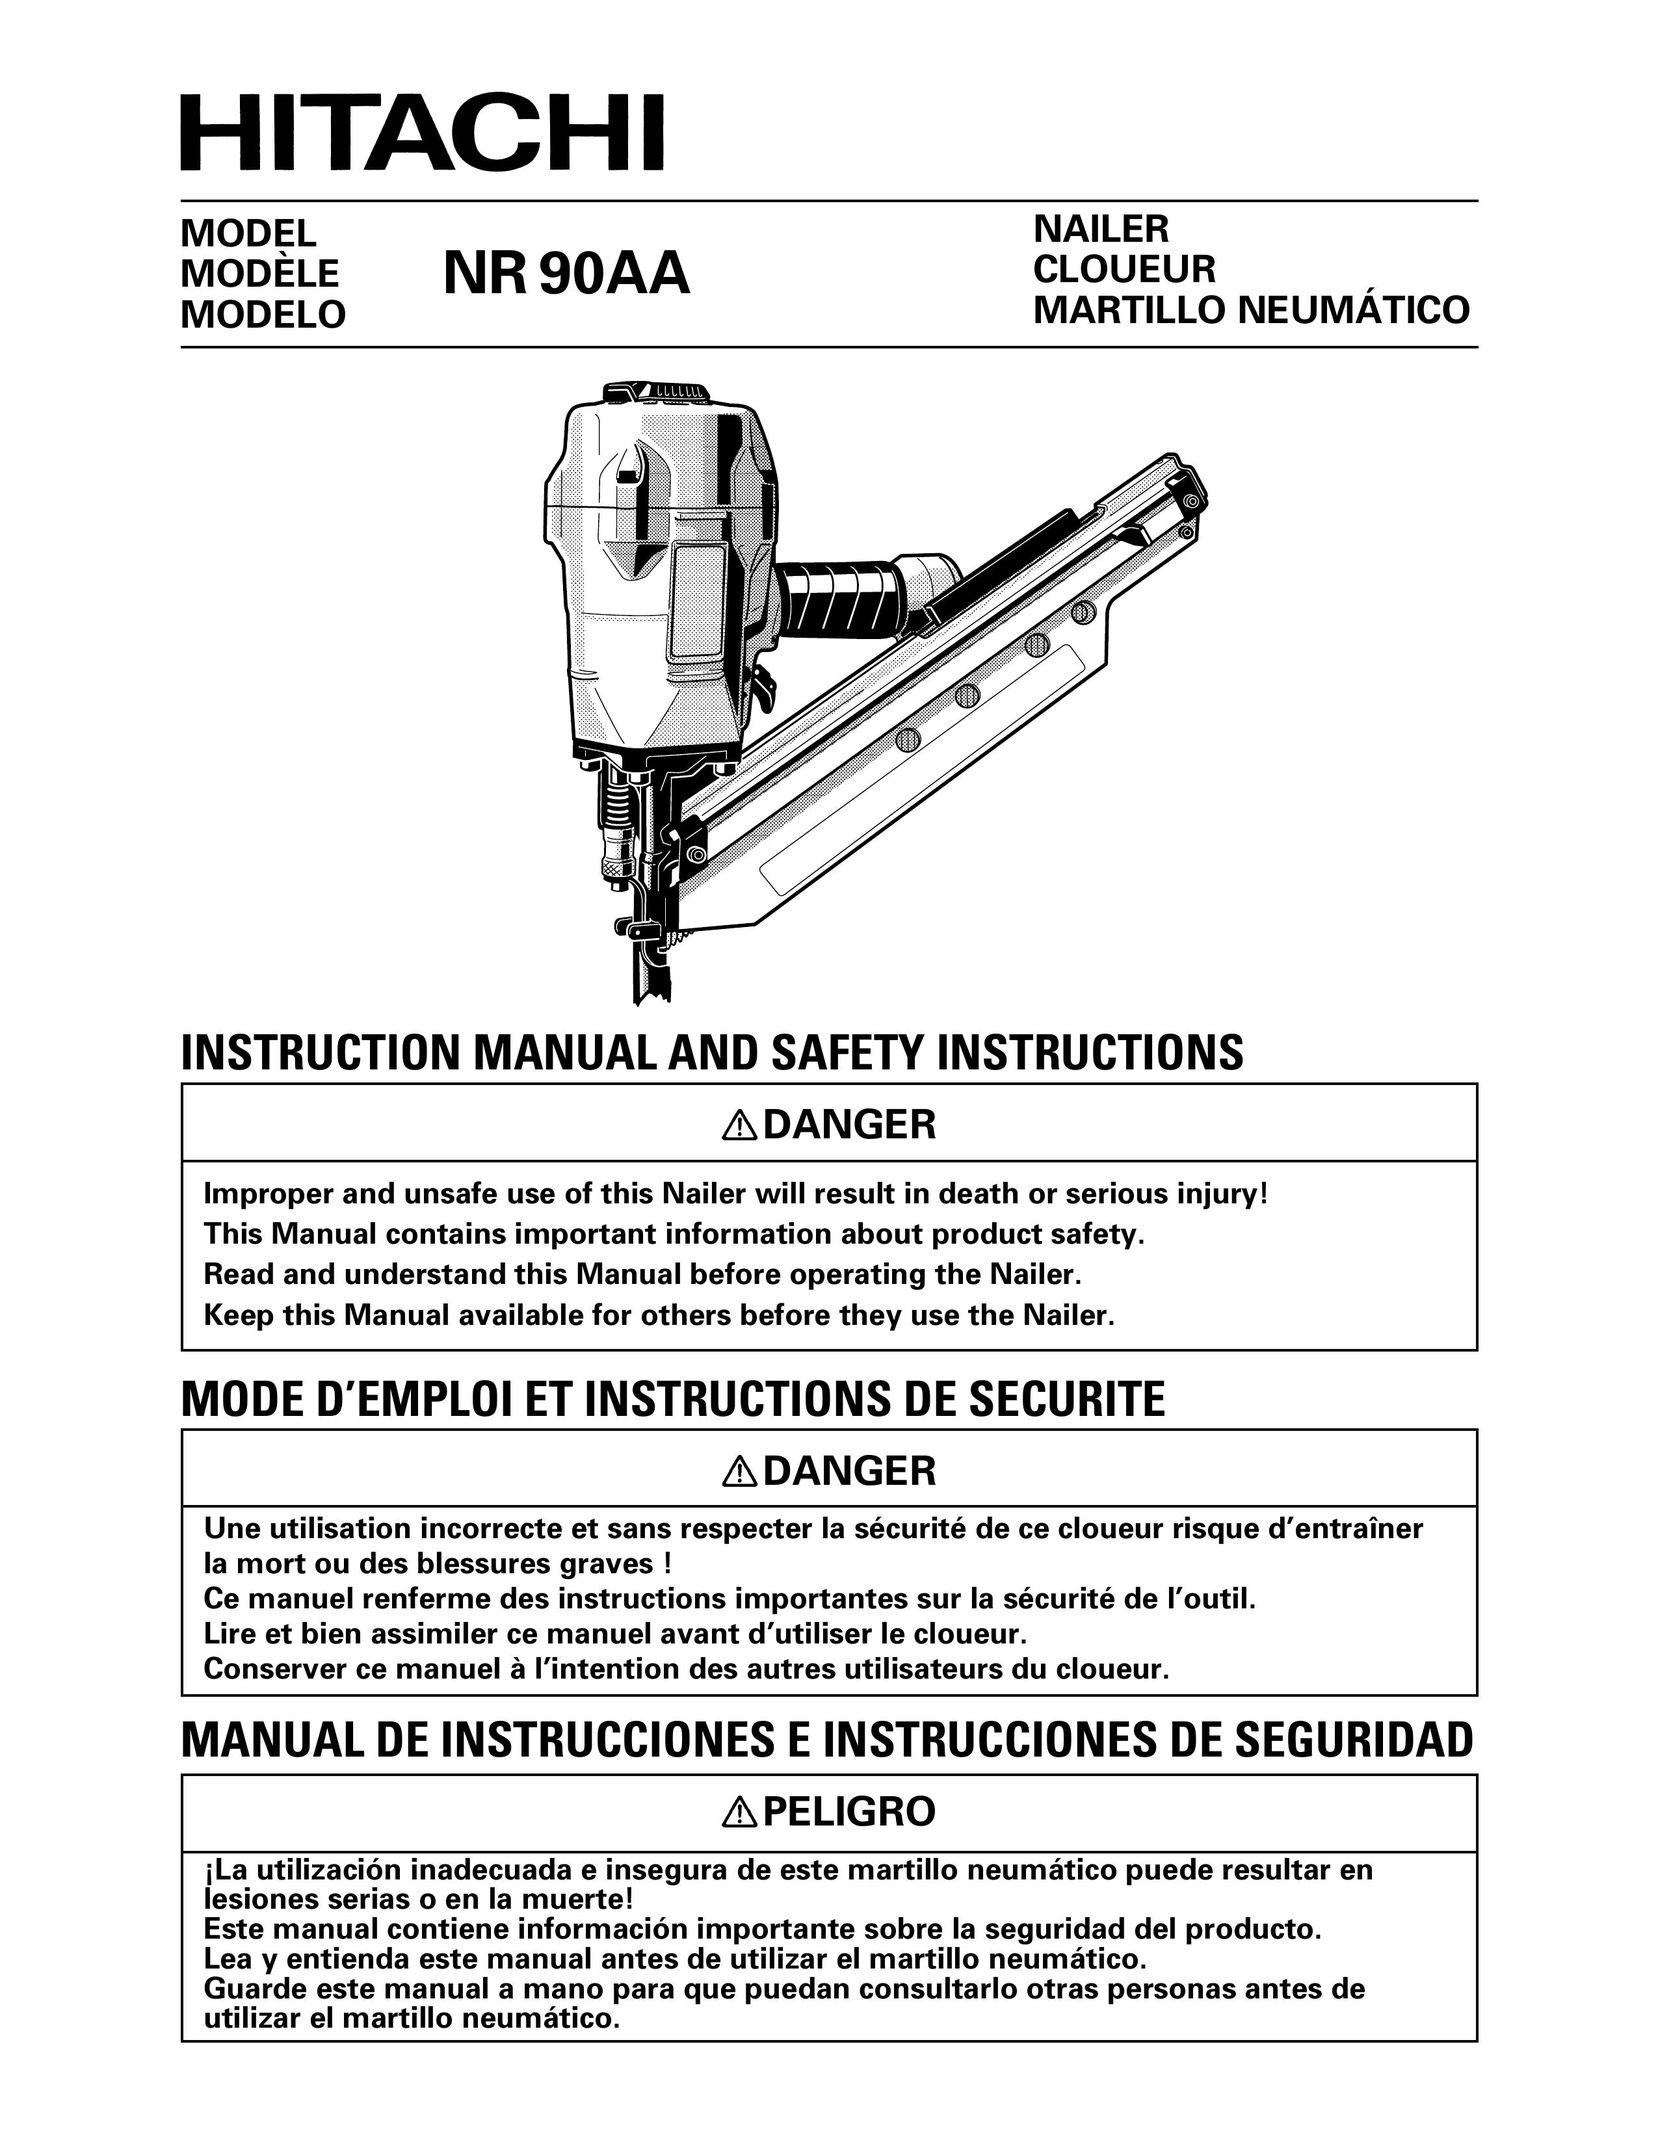 Hitachi NR90AA Nail Gun User Manual